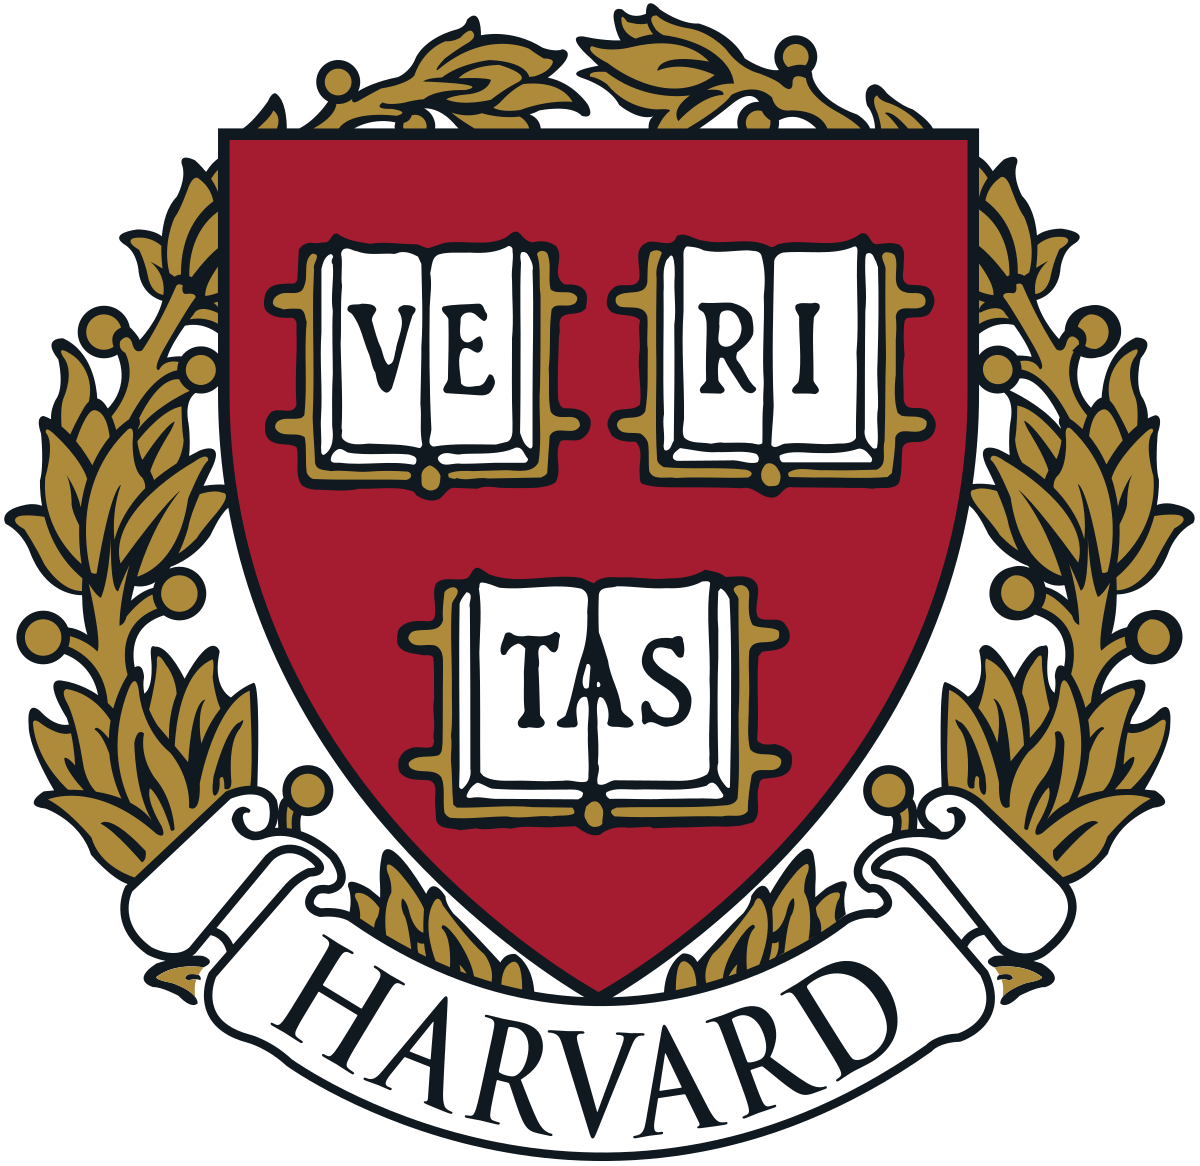 Harvard Logo - Harvard University